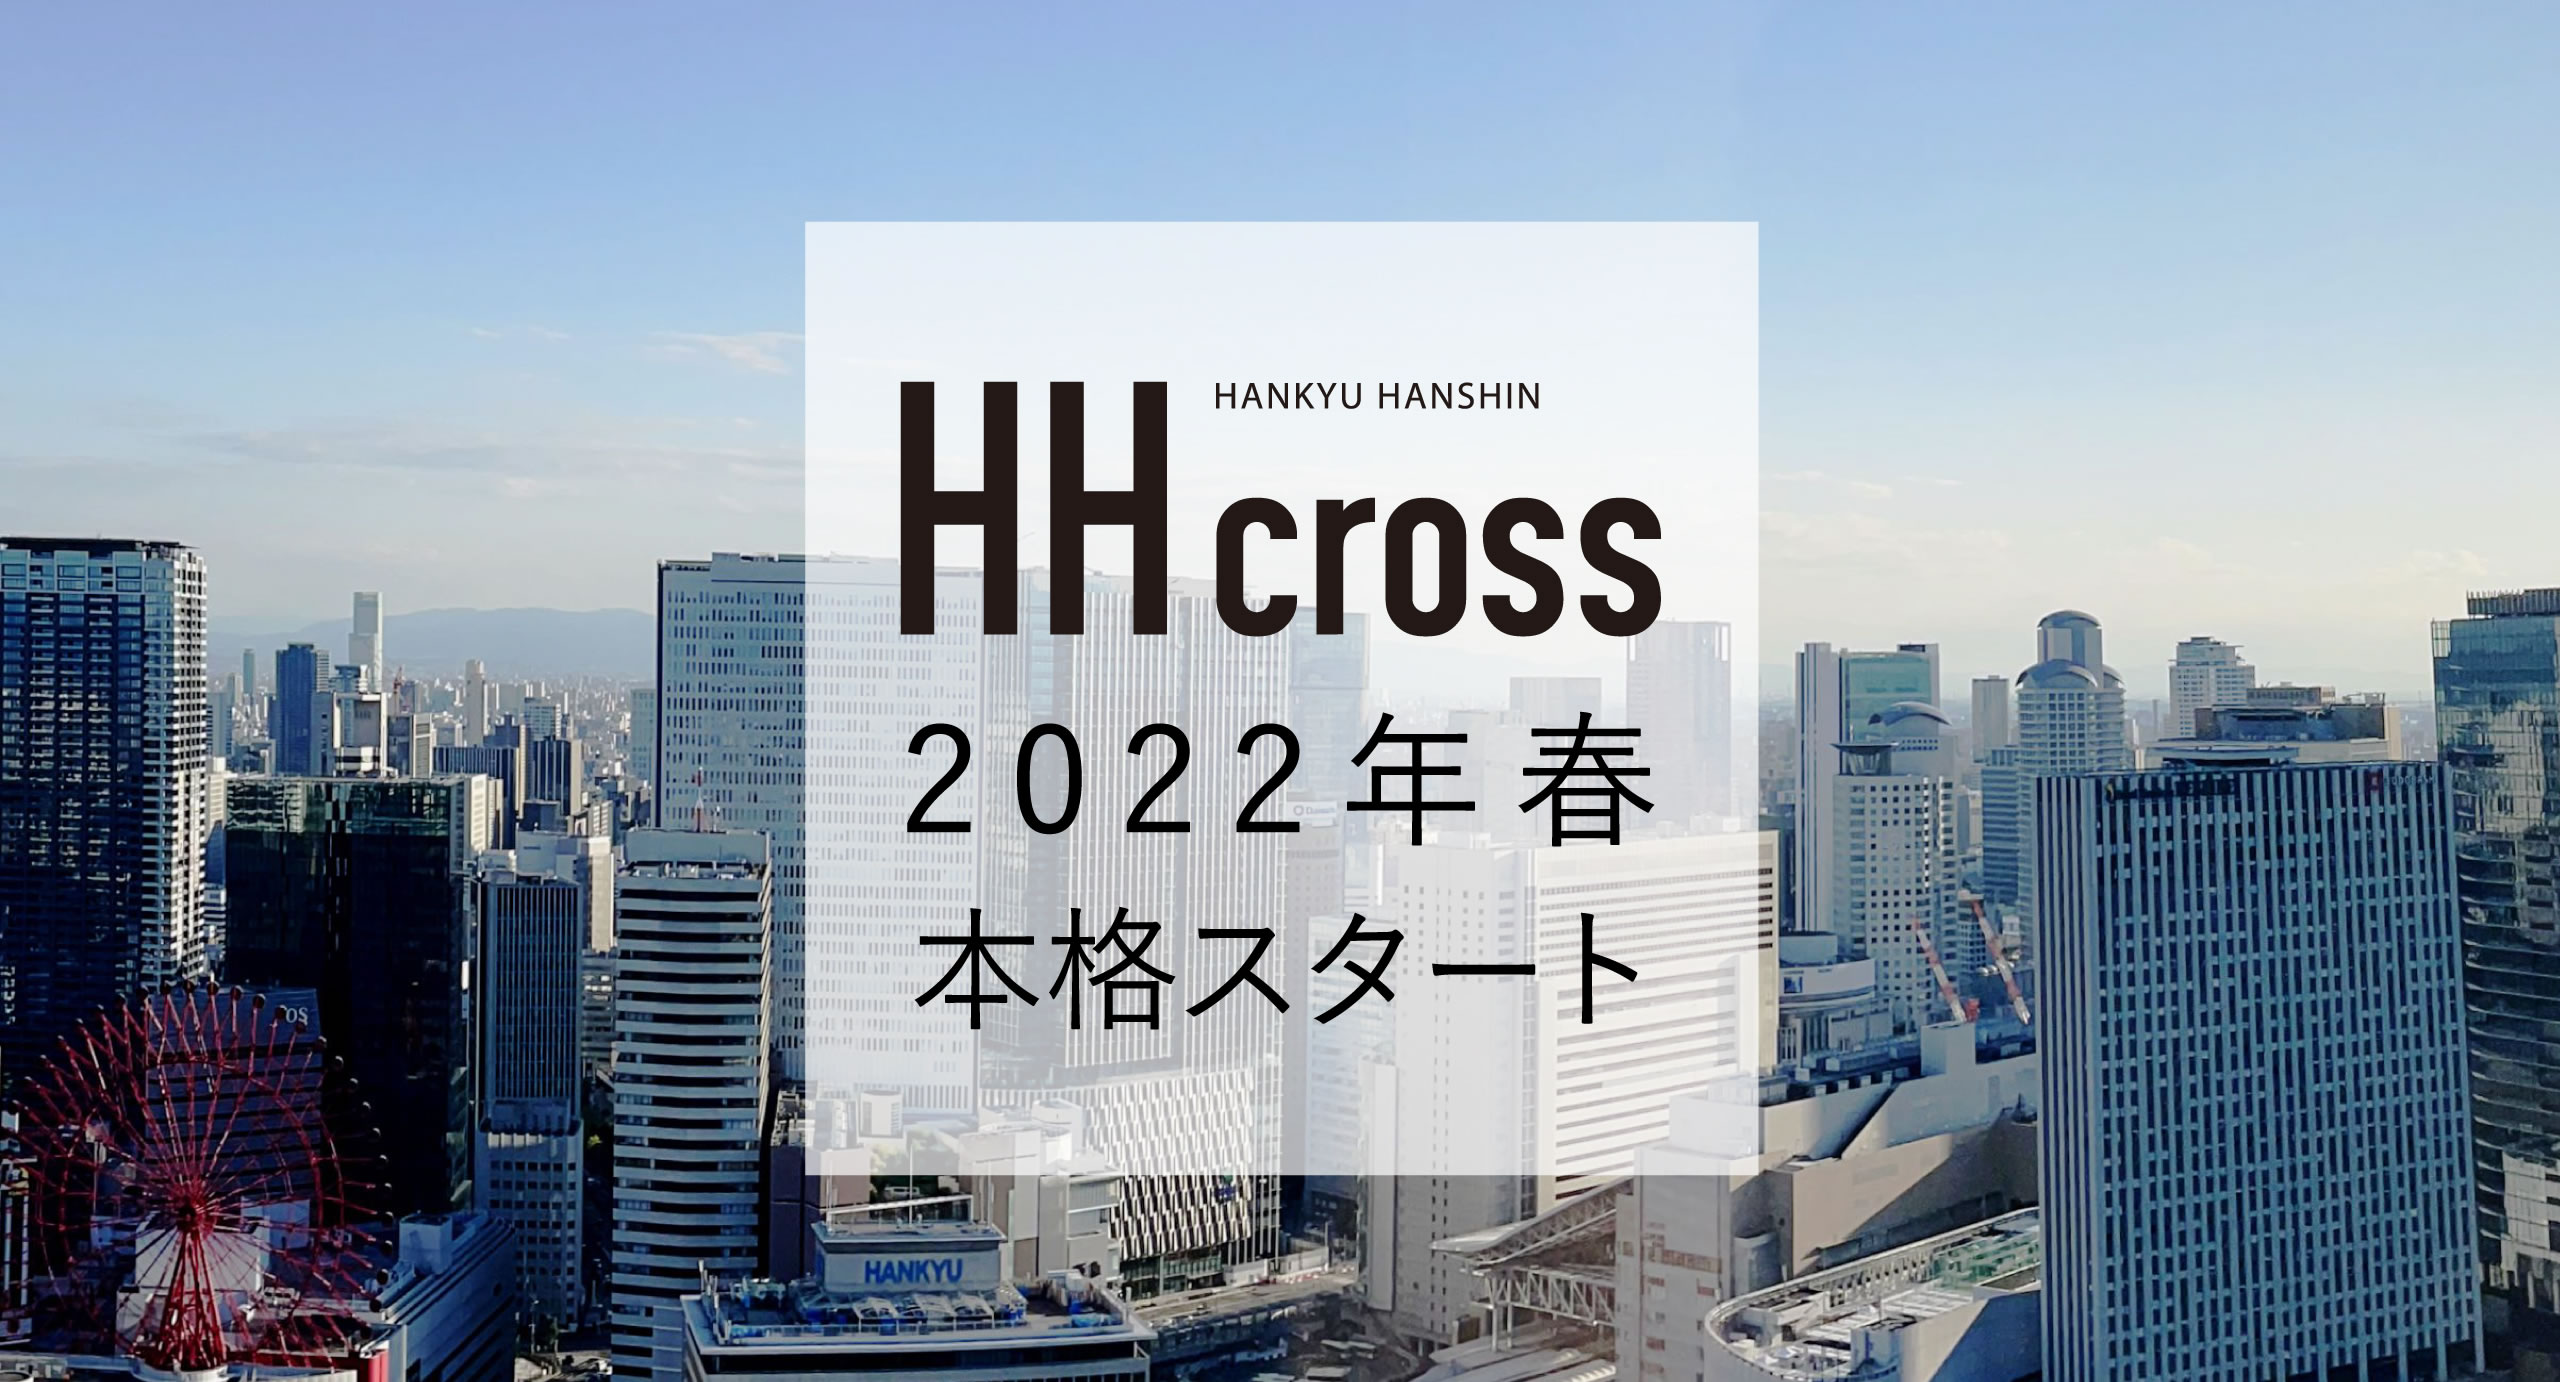 HH cross 2022年春 公式デビュー